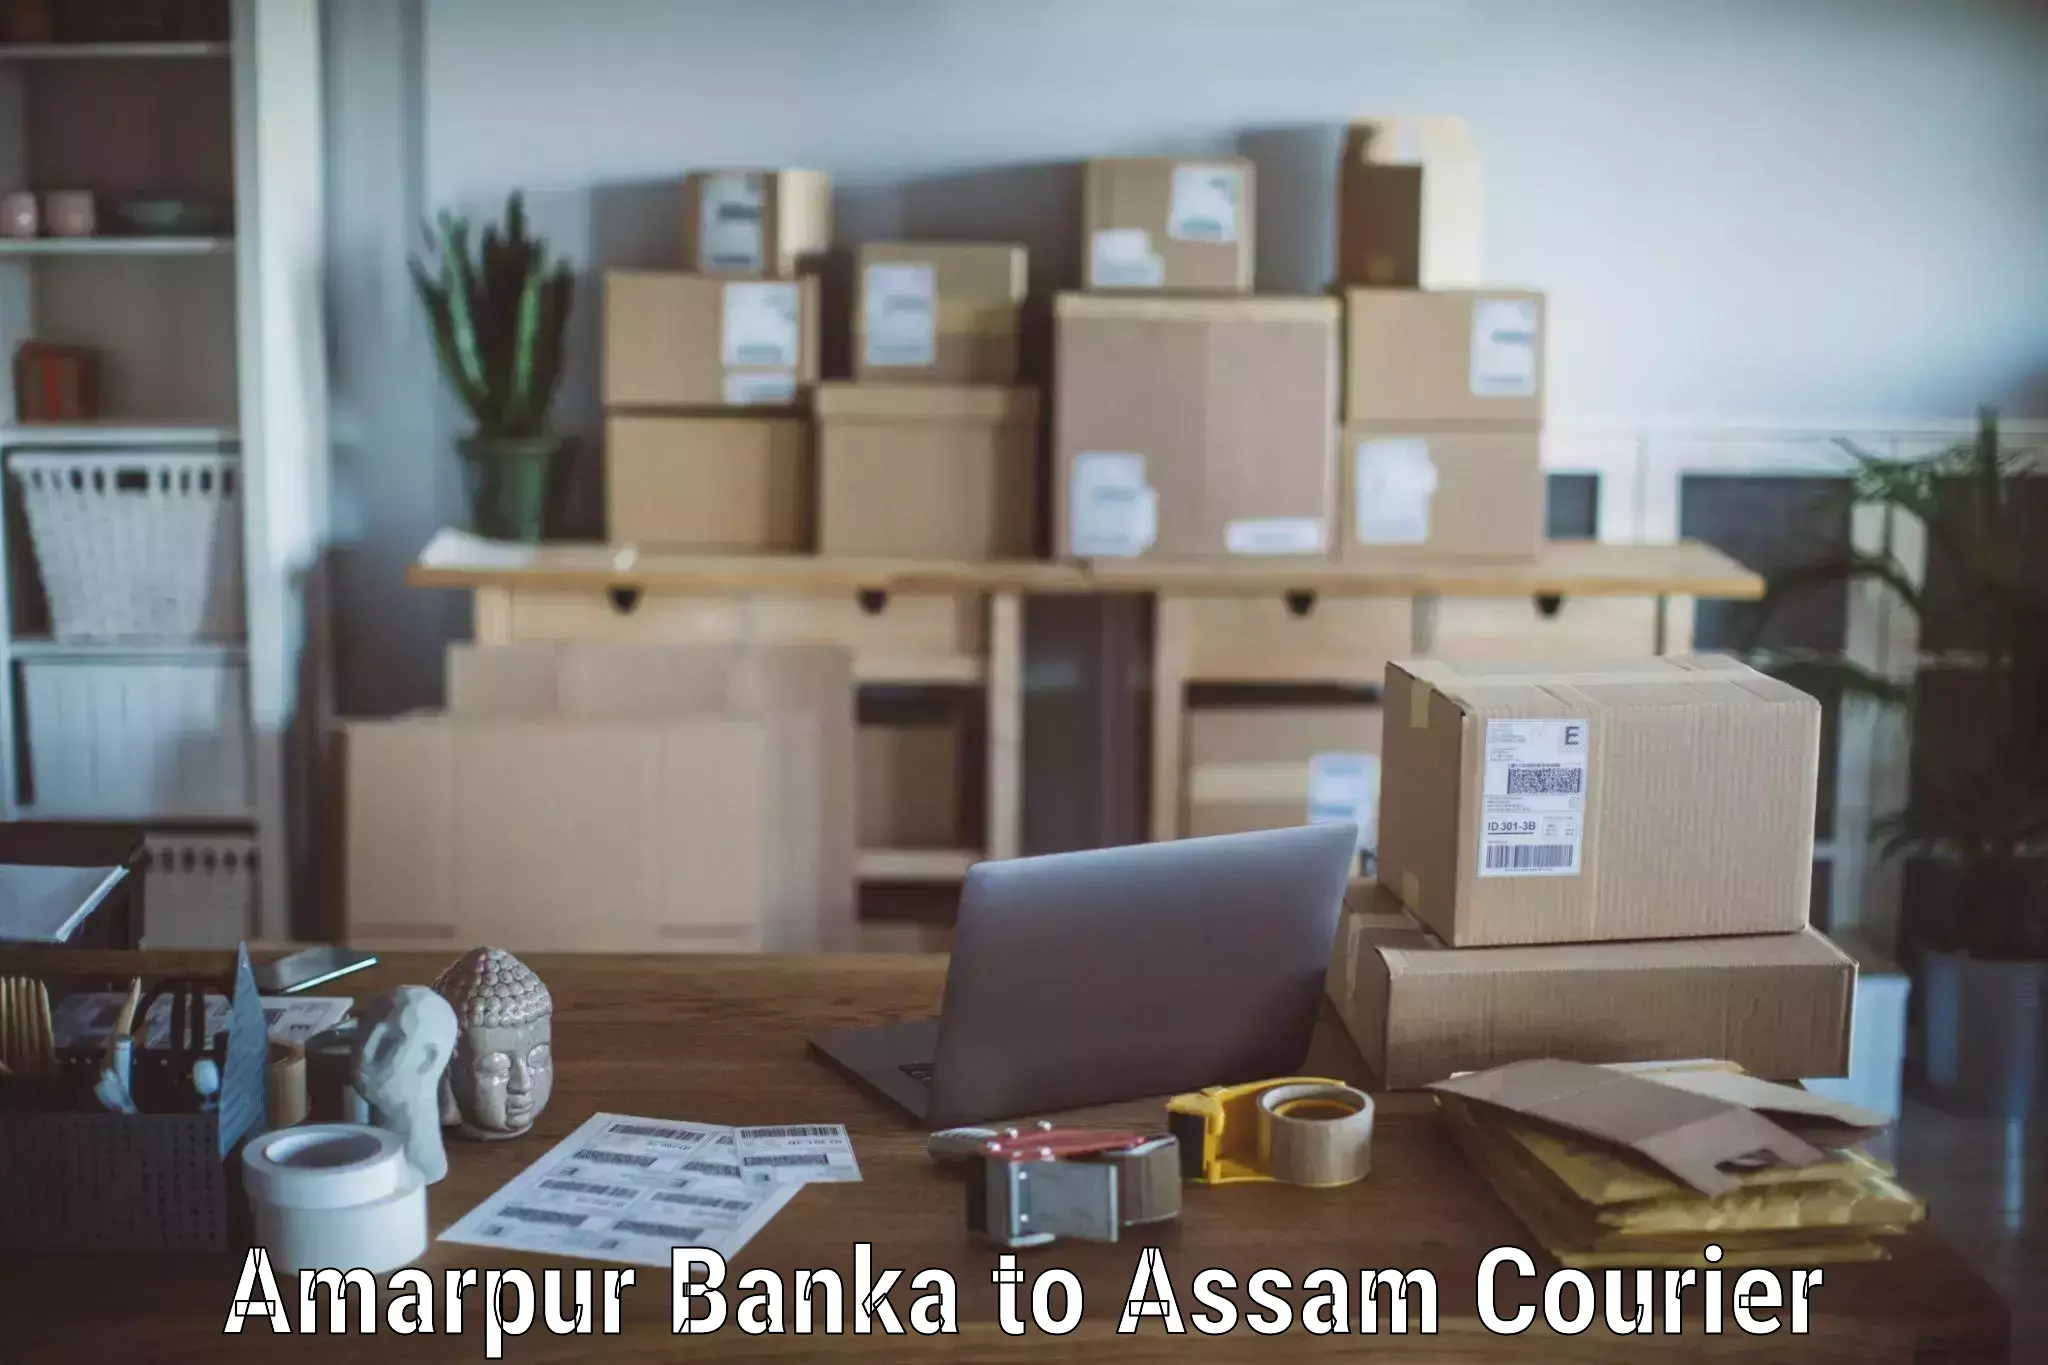 Professional movers and packers Amarpur Banka to Jorabat